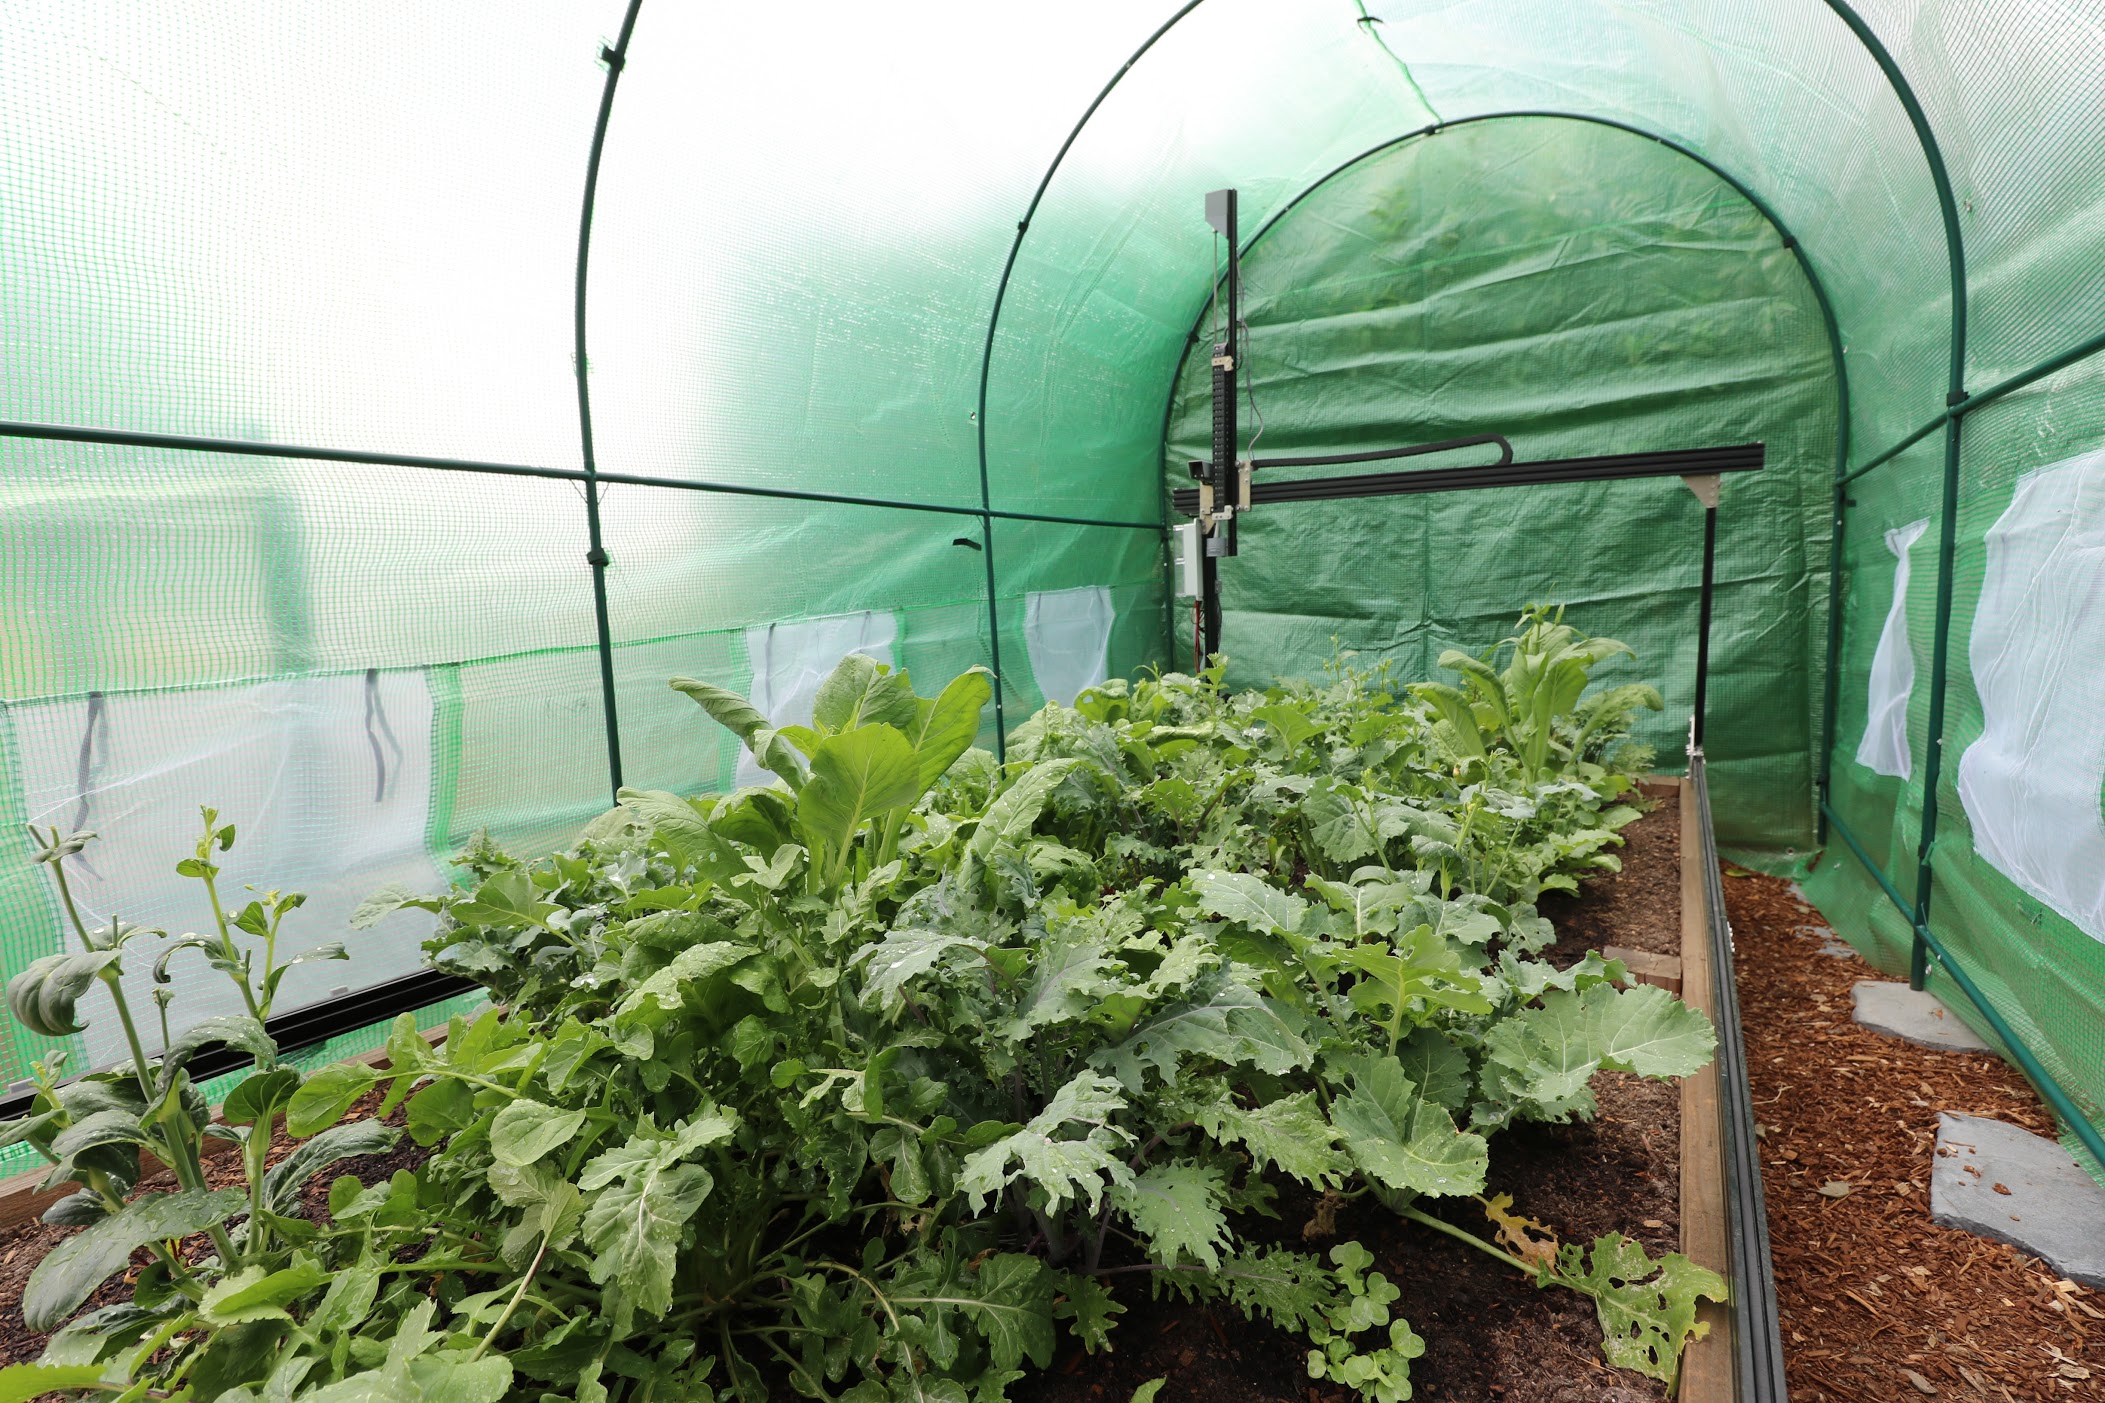 farmbot in greenhouse